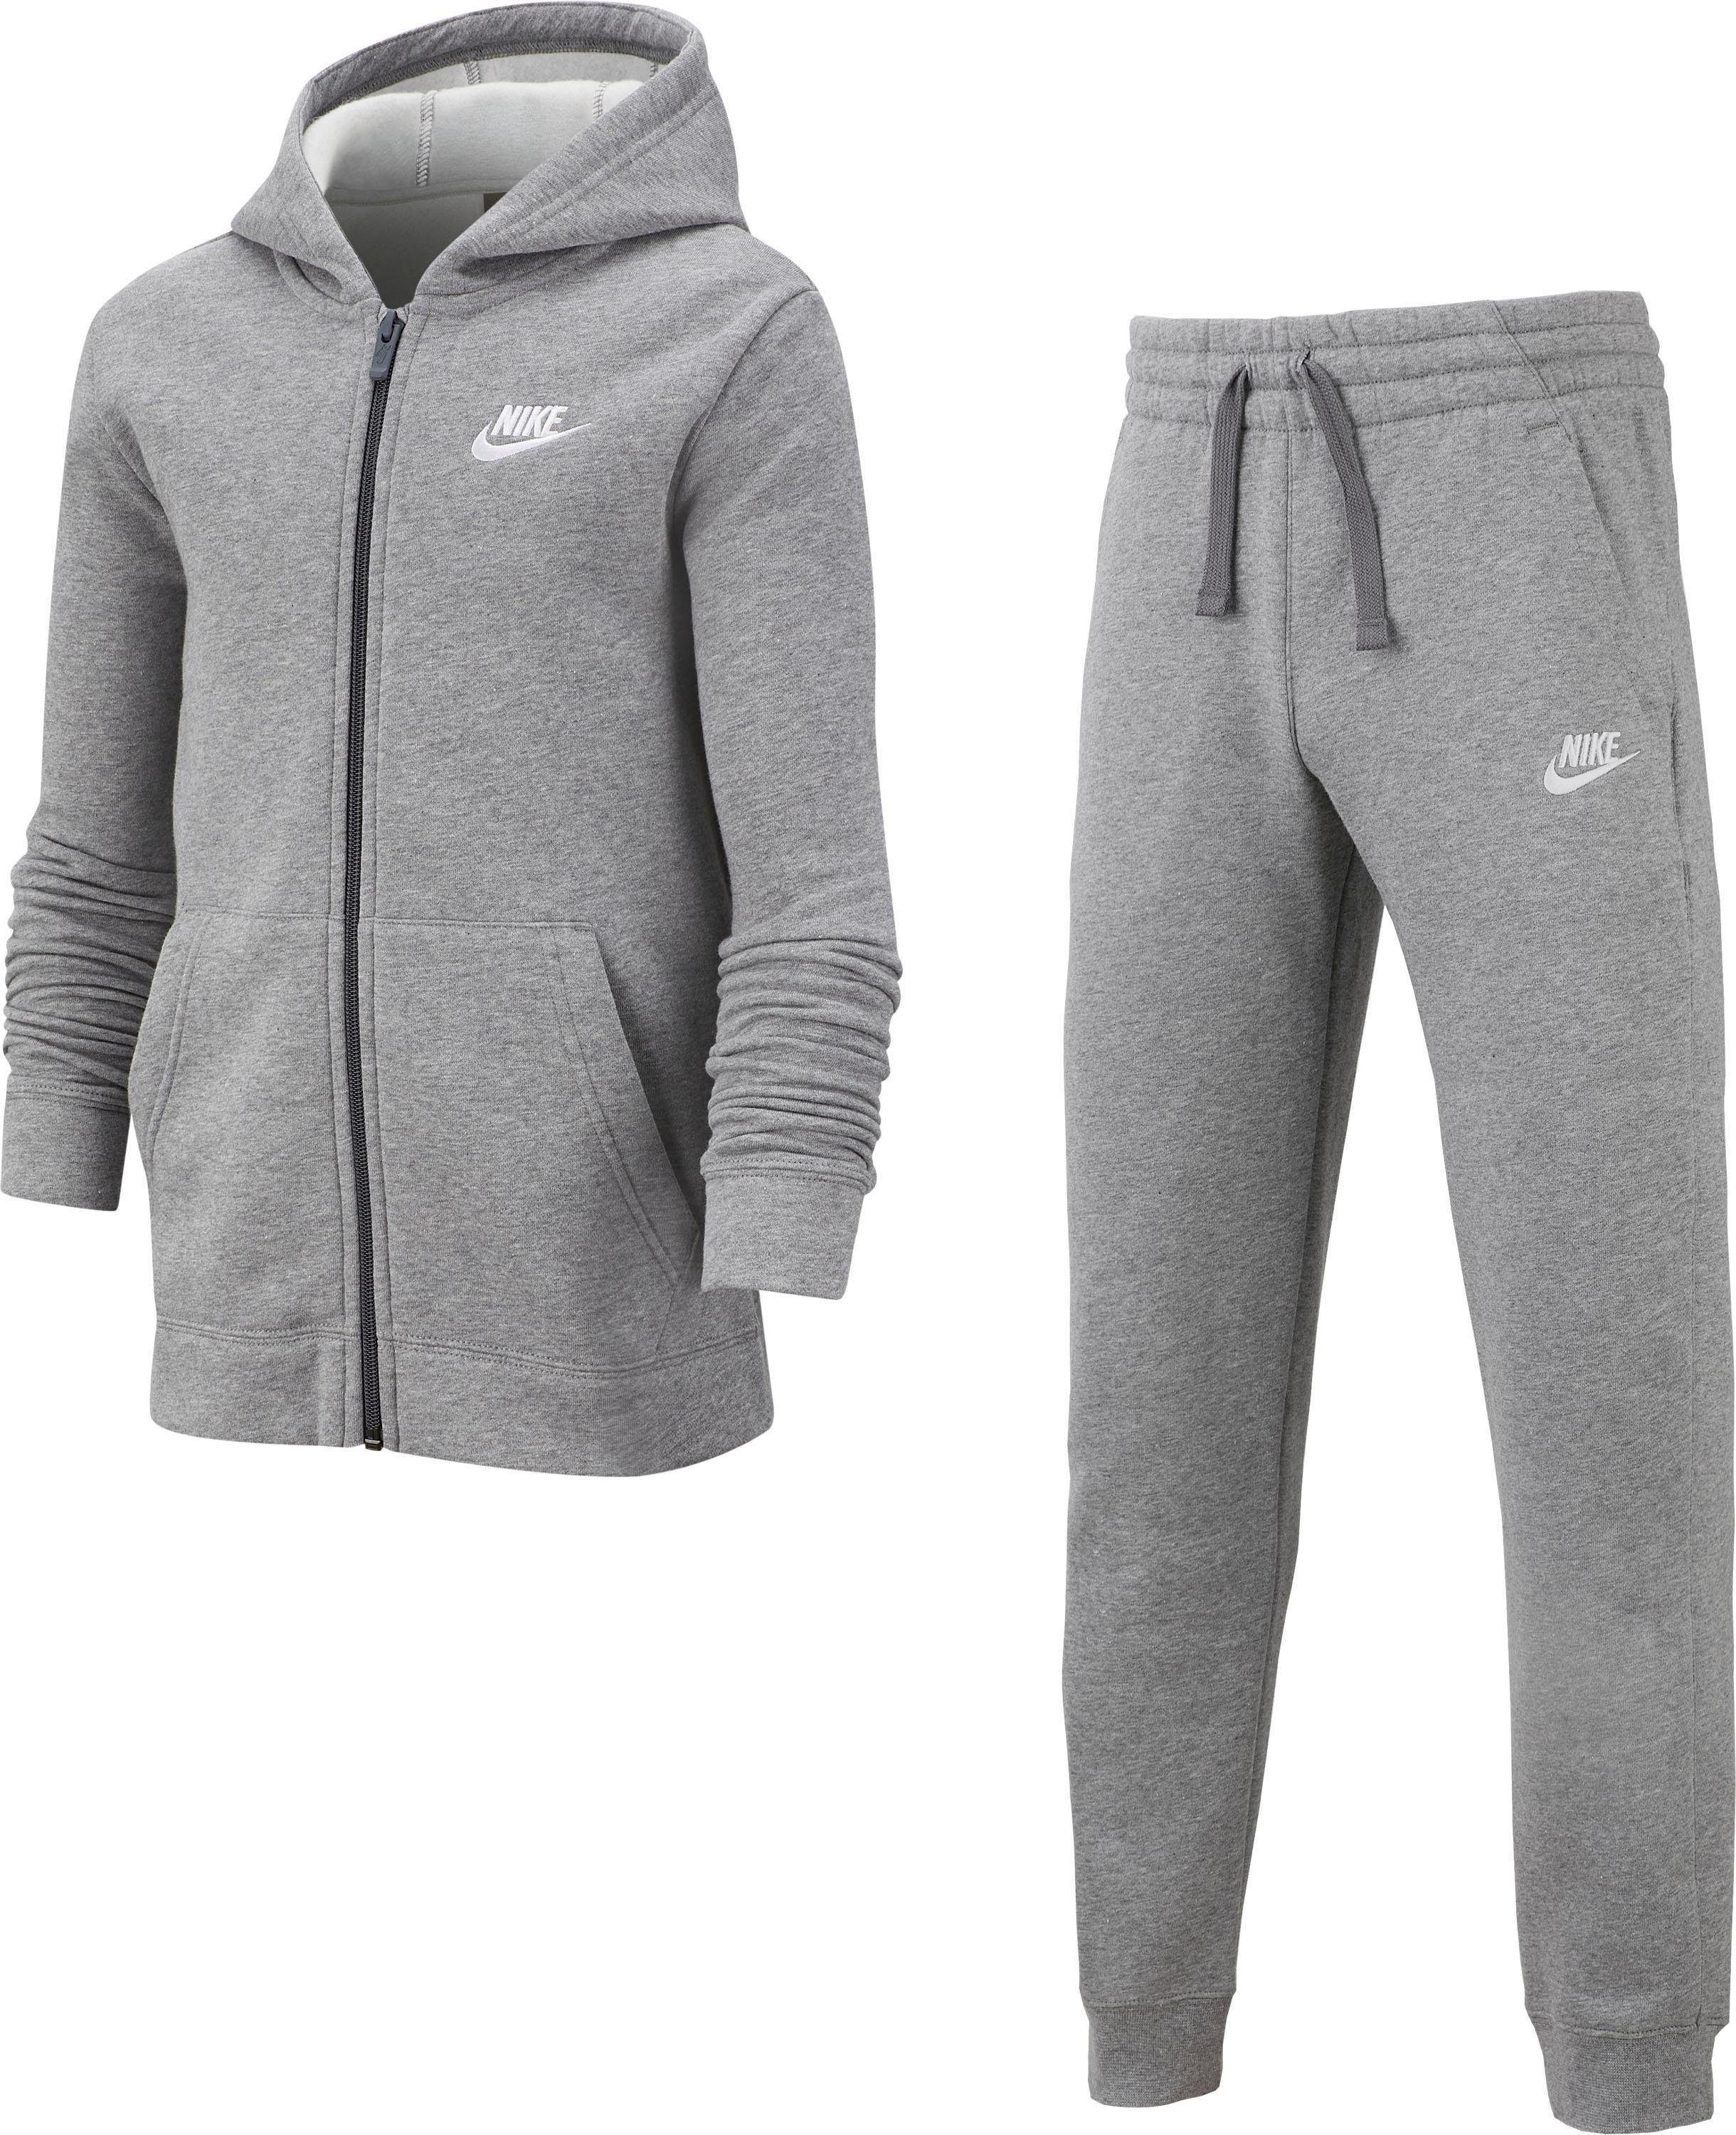 Nike Sportswear Jogginganzug NSW CORE (Set, 2-tlg), für grau-meliert Kinder